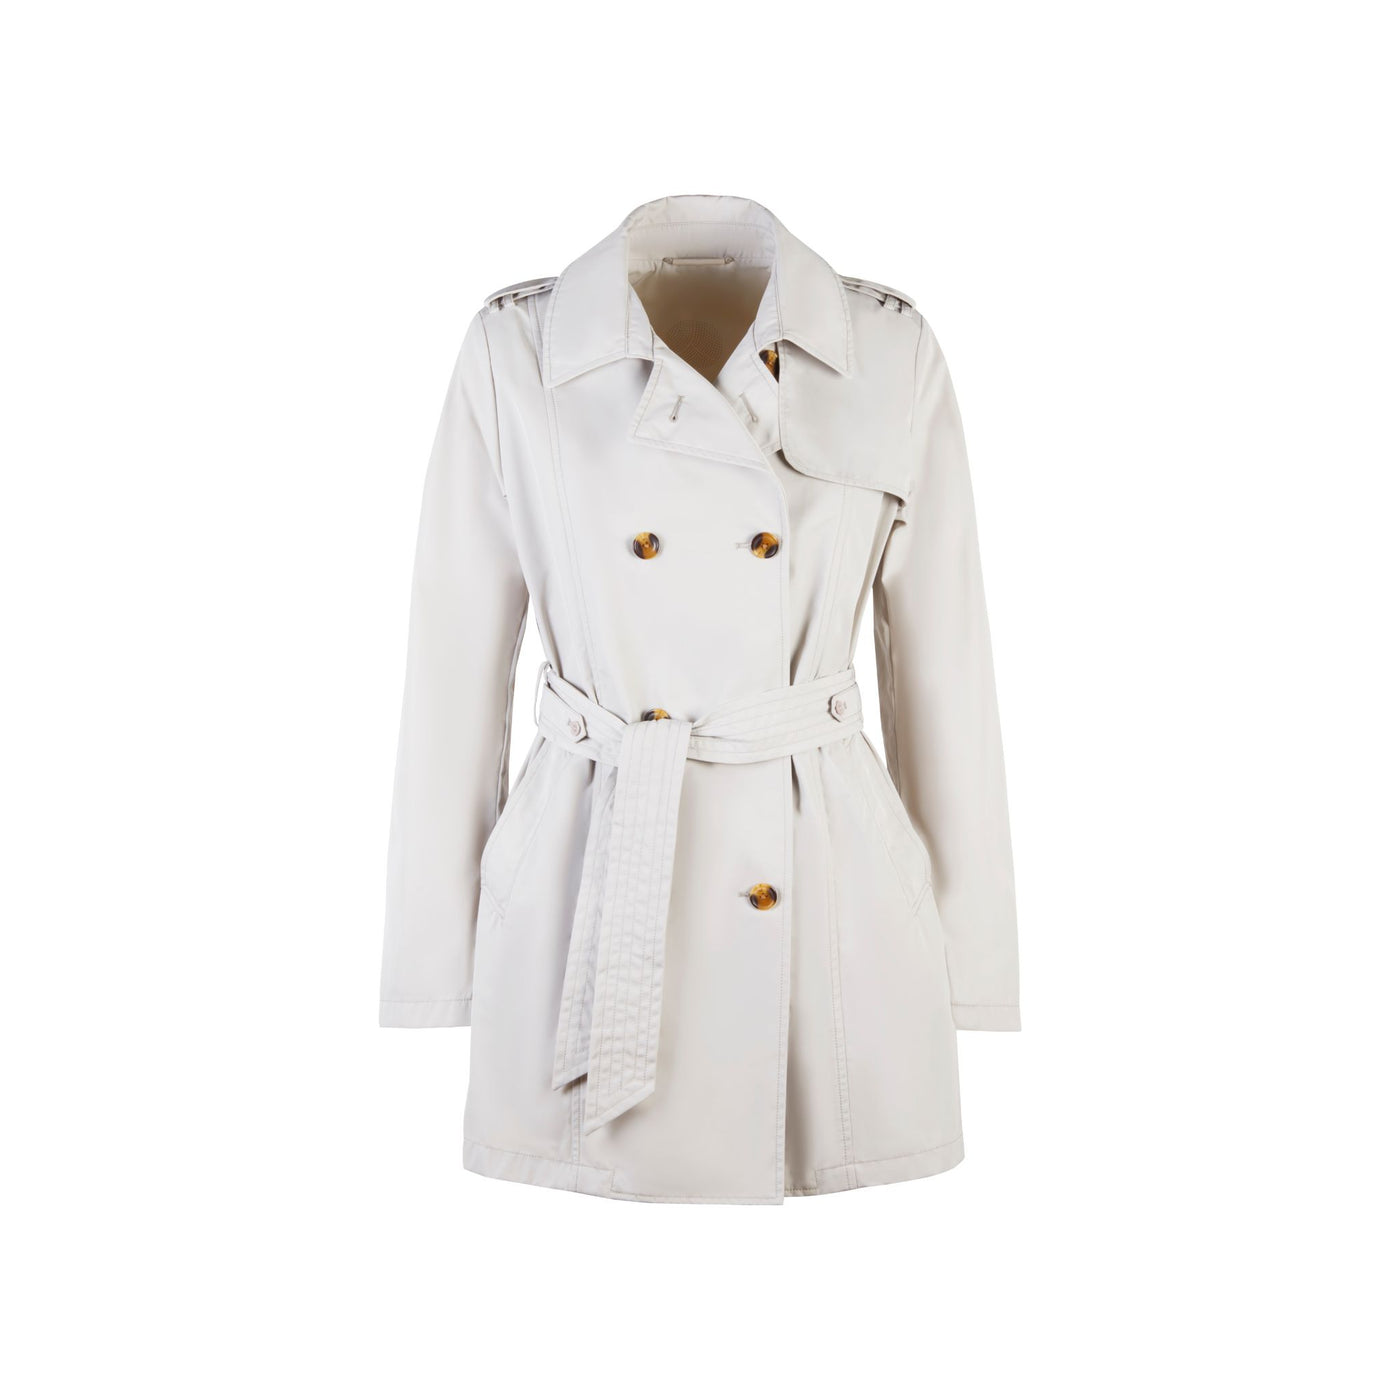 Women's trench coat with raglan sleeves